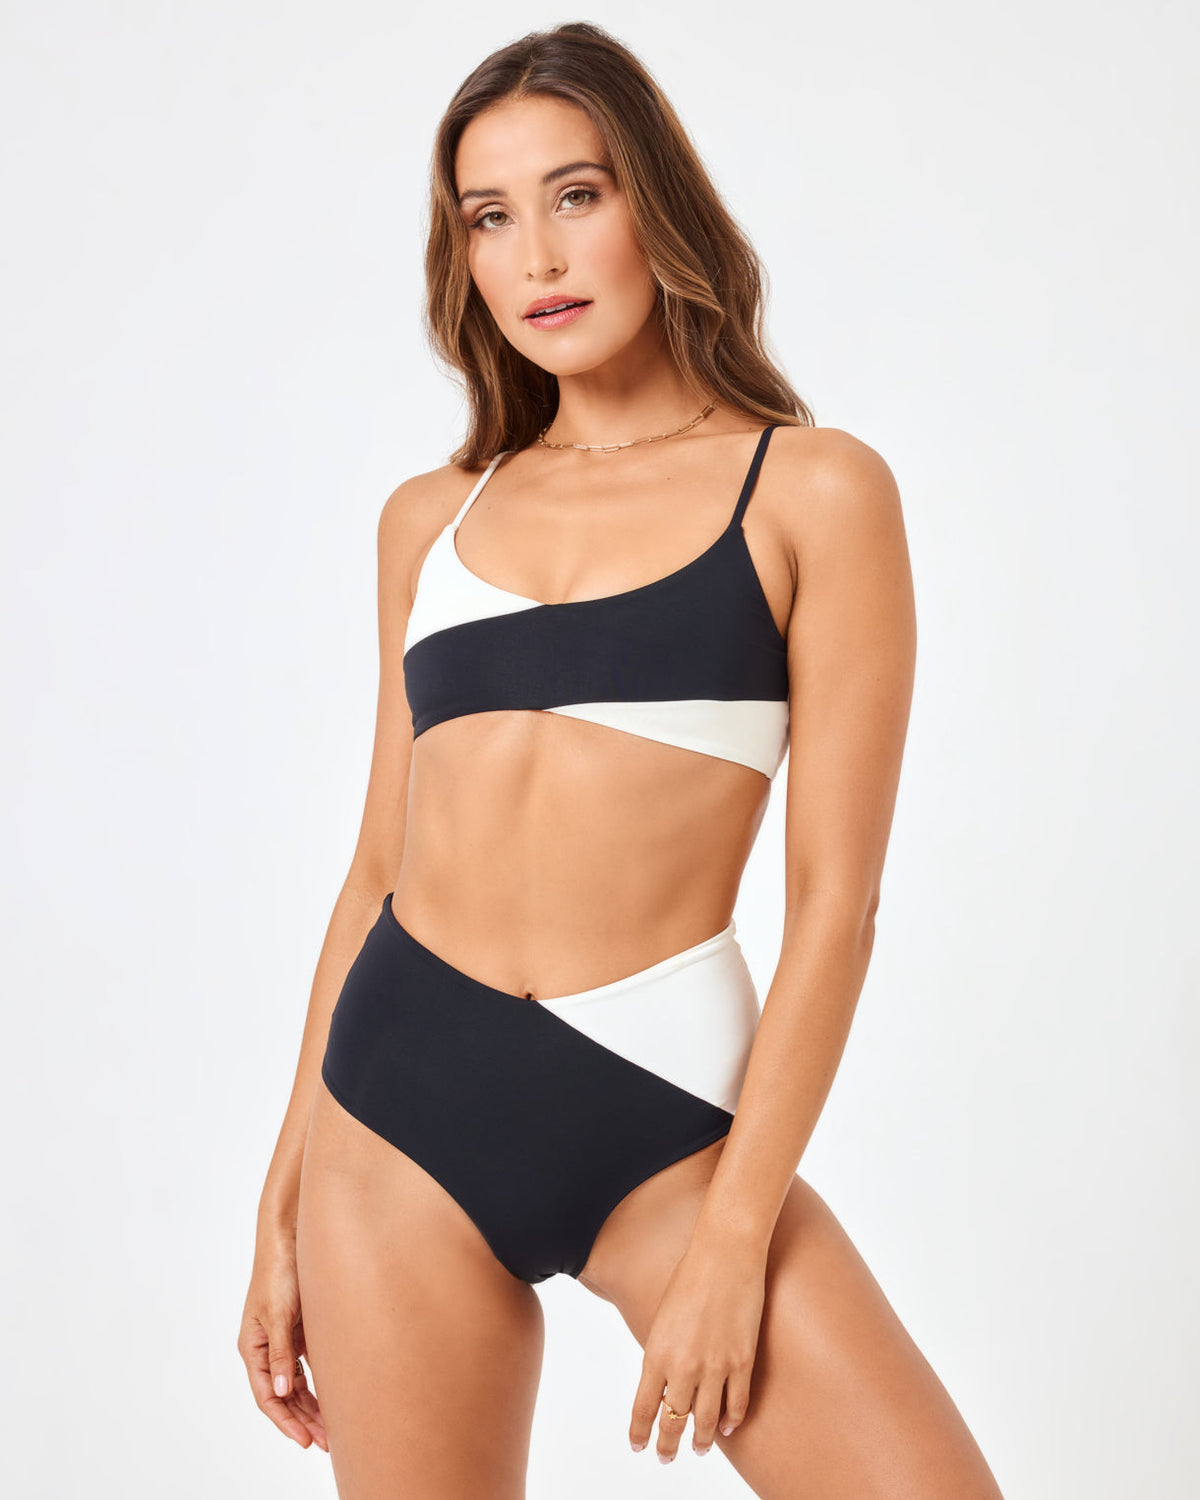 Sports Bra Style Fully Adjustable Bandeau Bralette Swim Suit Bikini Top  more Color Available -  Israel